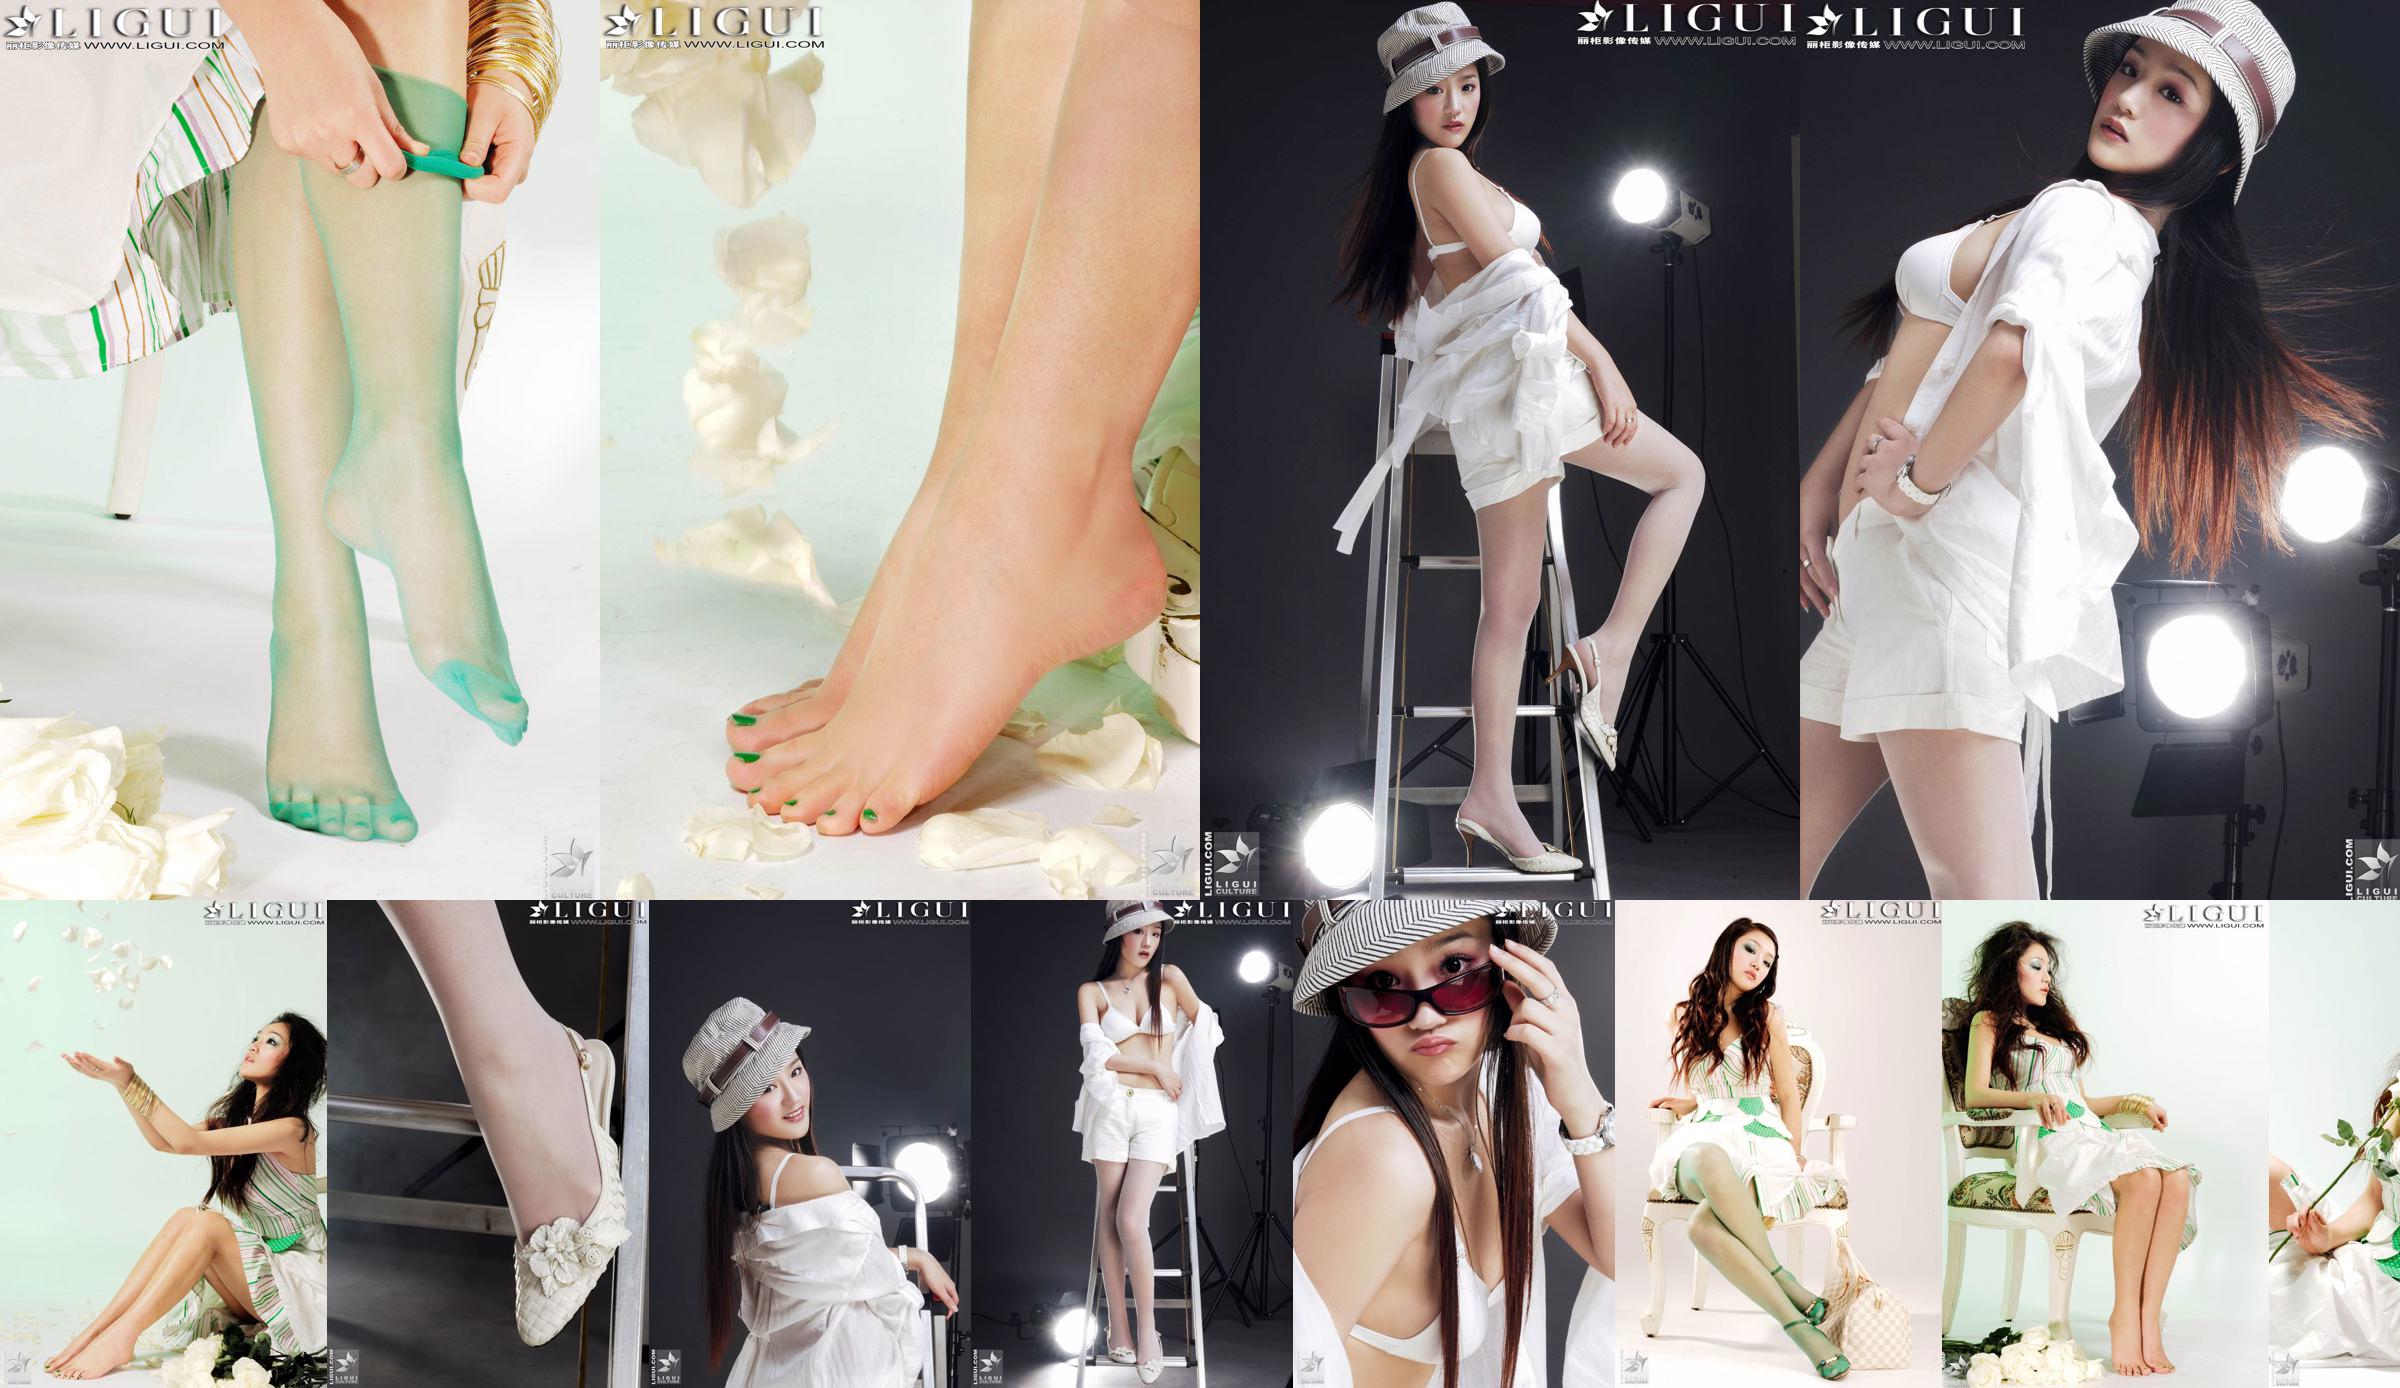 [丽 柜 贵 pé LiGui] Foto "Fashionable Foot" do modelo Zhang Jingyan de belas pernas e pés de seda No.bd905d Página 3